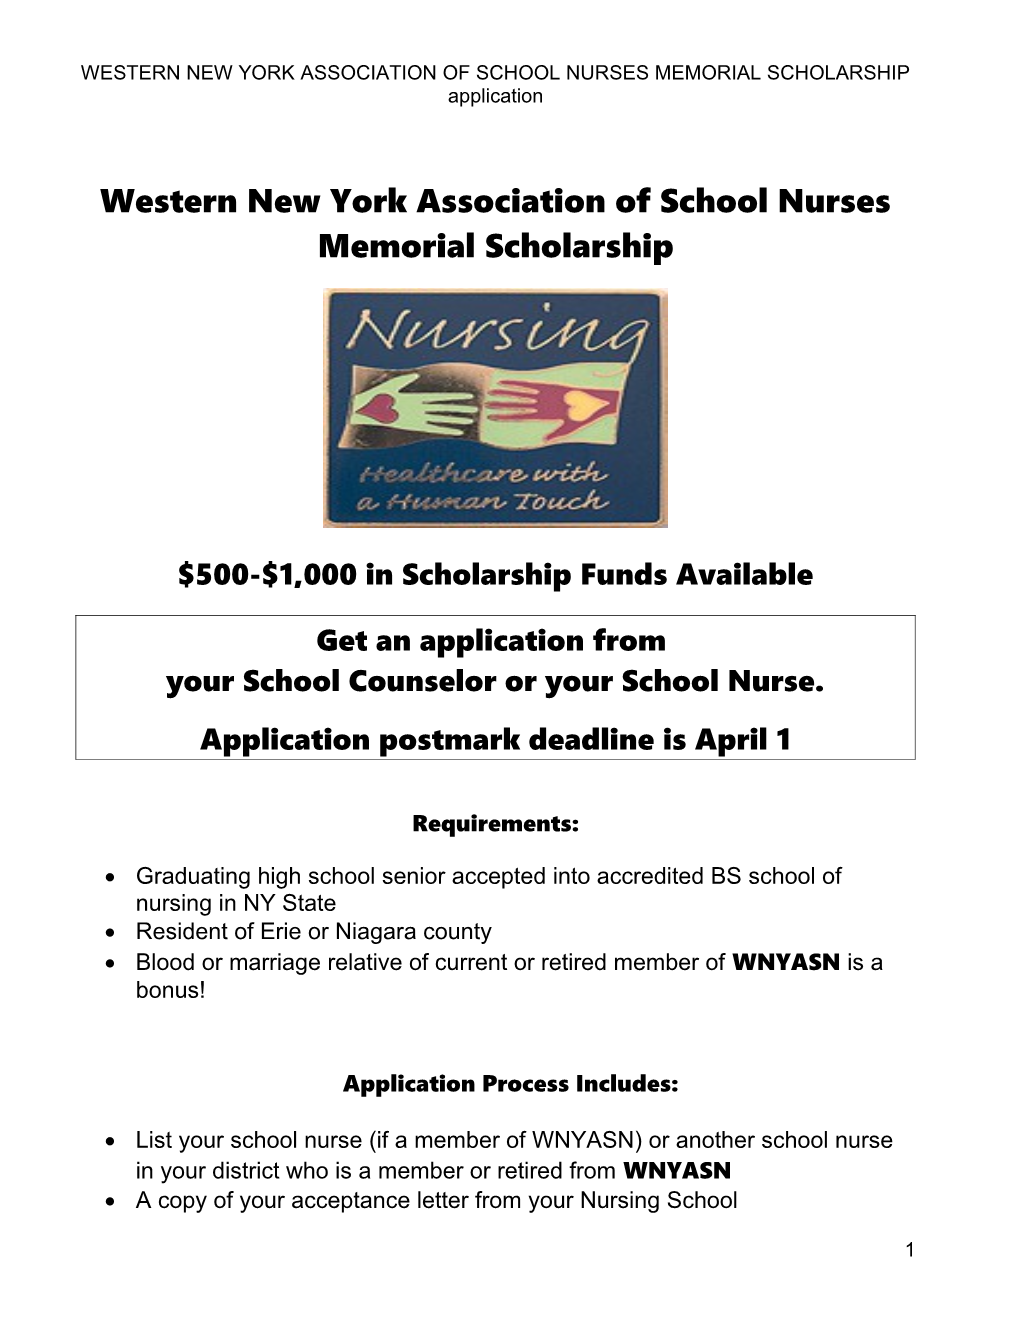 Western New York Association of School Nurses